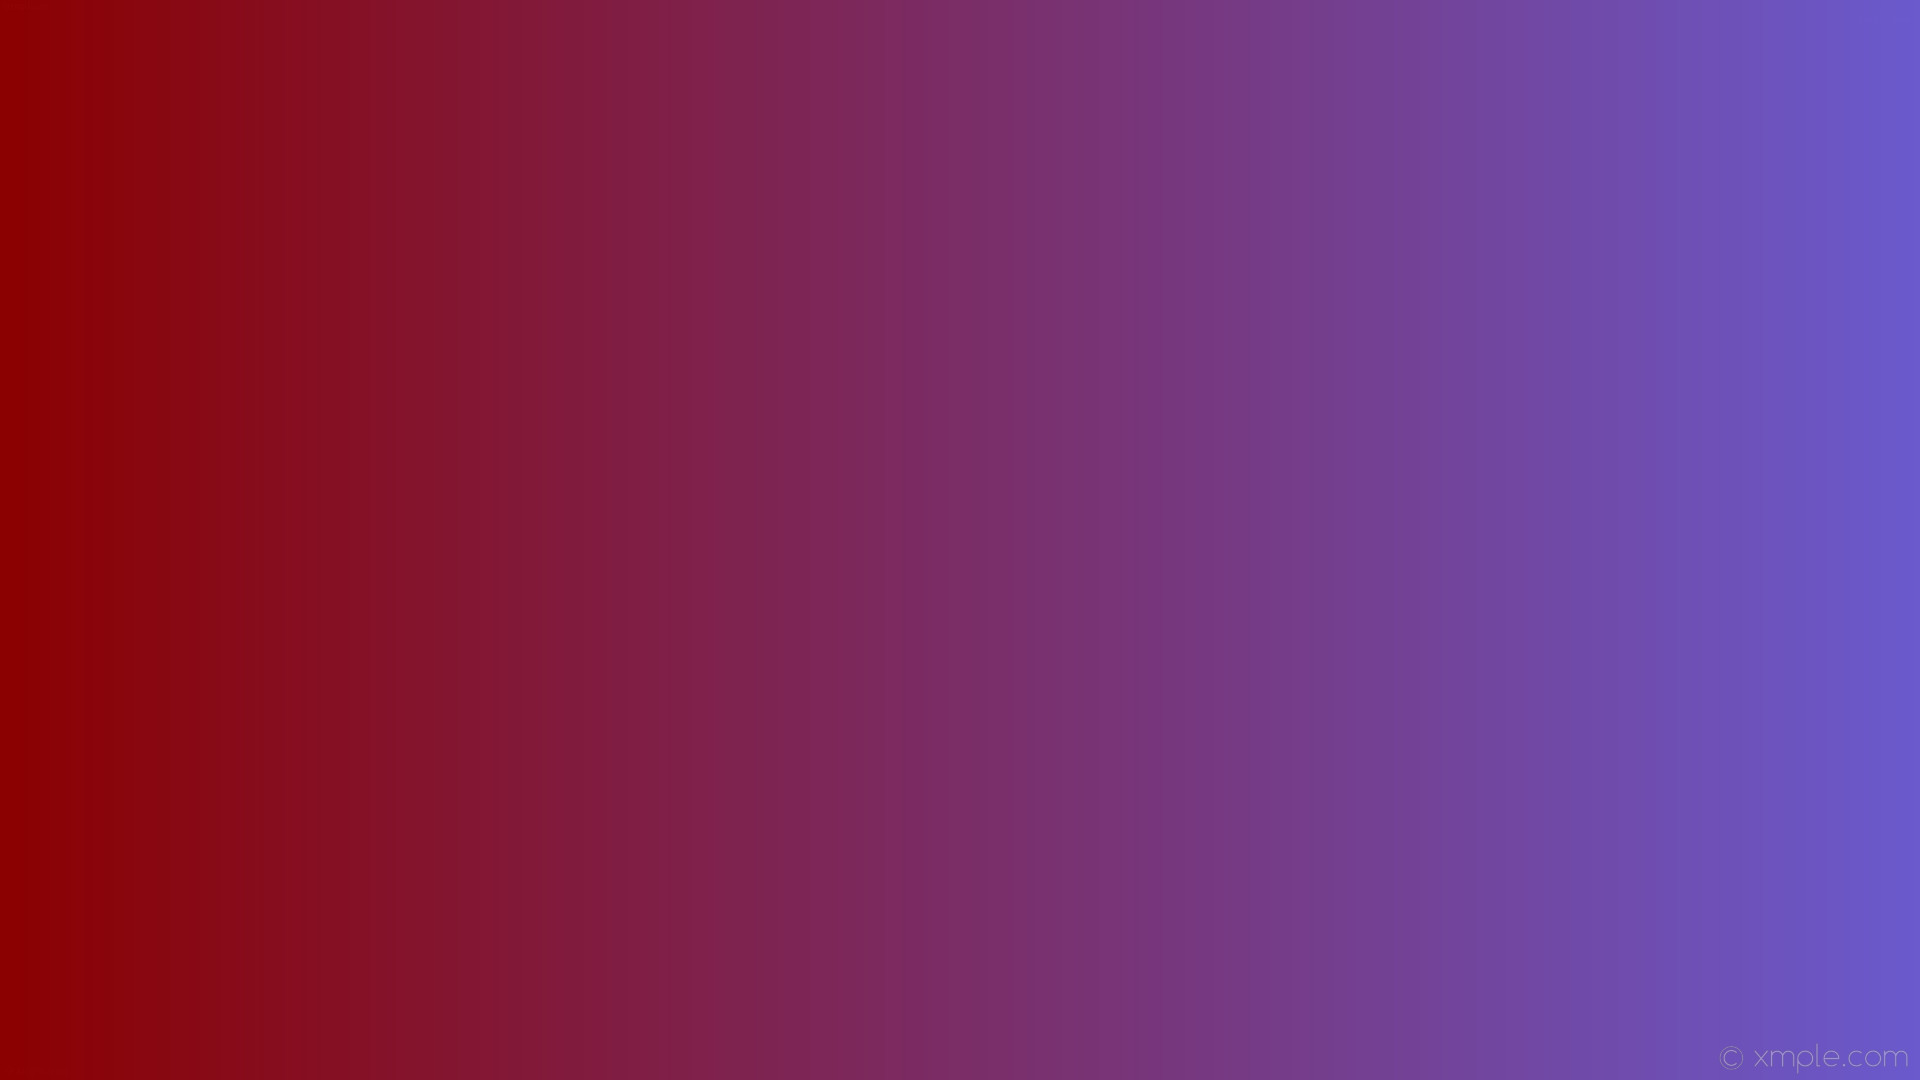 1920x1080 wallpaper gradient purple red linear slate blue dark red #6a5acd #8b0000 0Â°